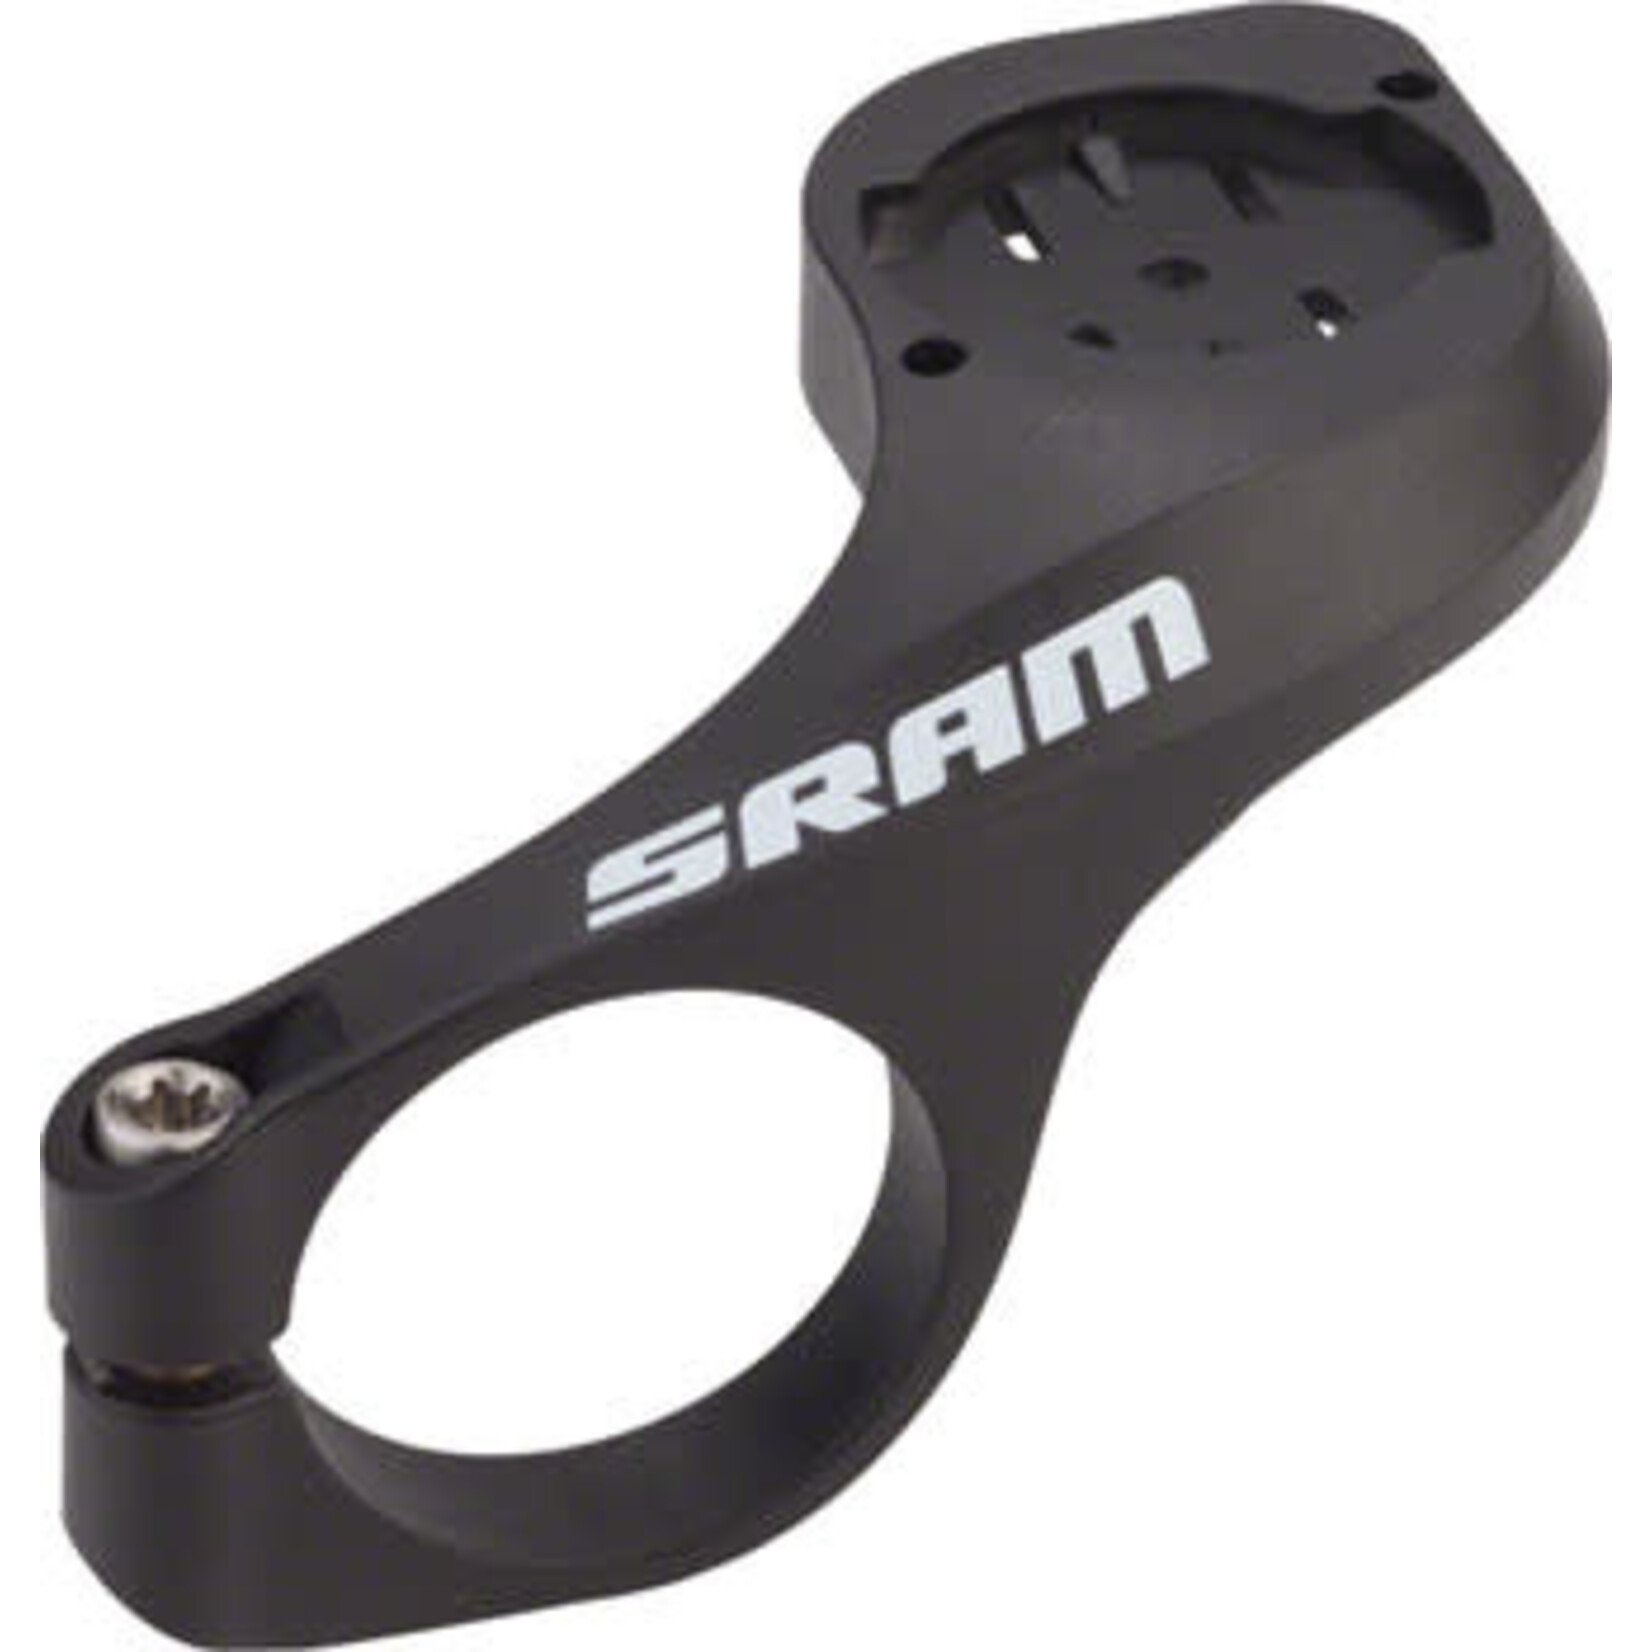 SRAM MTB QuickView Mount for Garmin